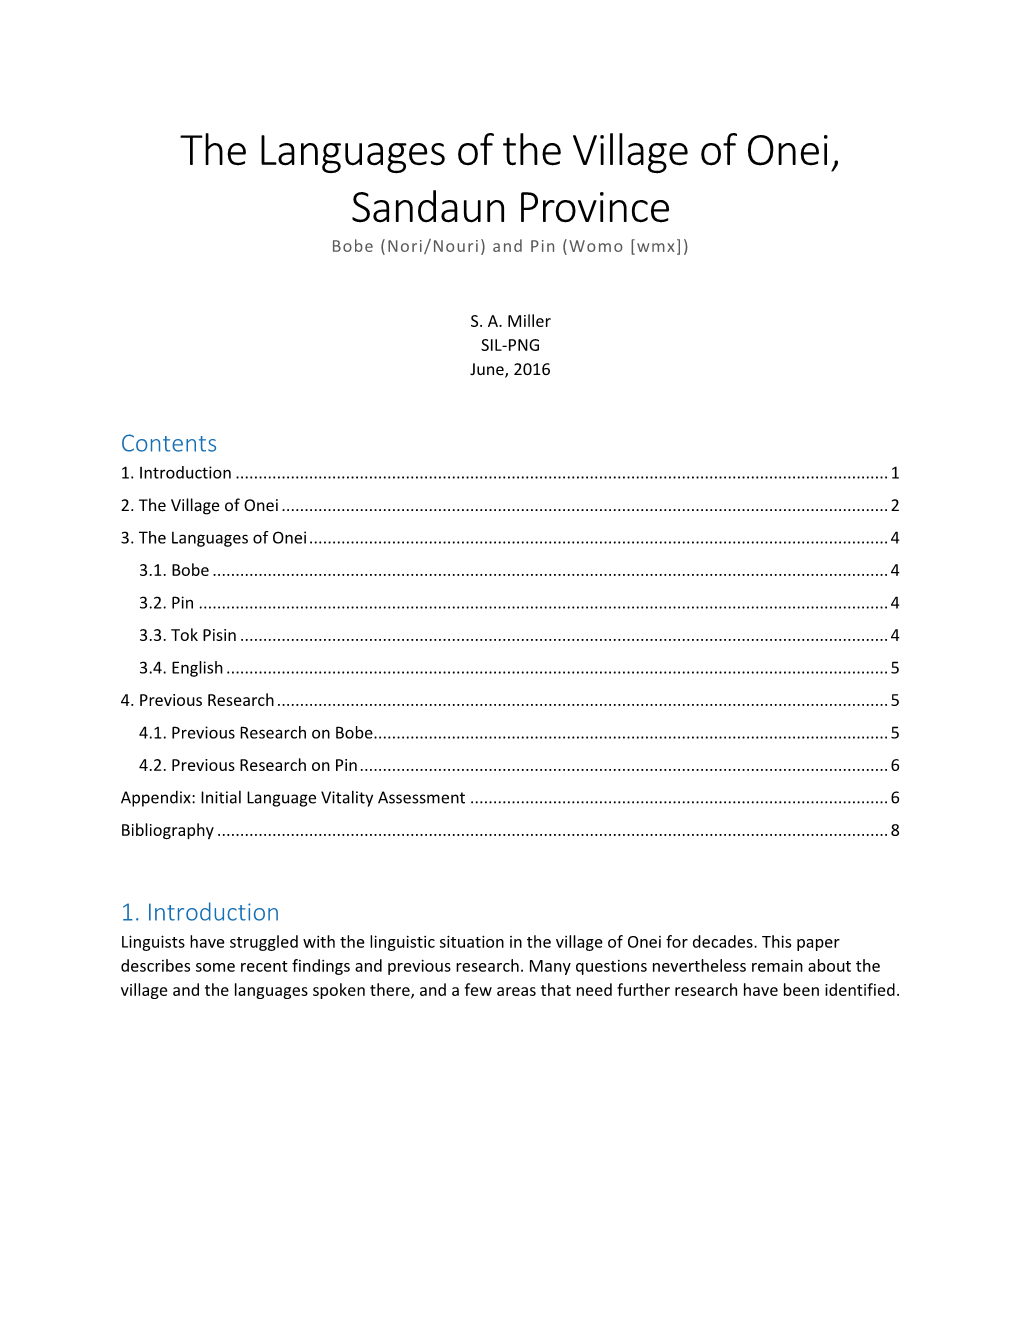 The Languages of the Village of Onei, Sandaun Province Bobe (Nori/Nouri) and Pin (Womo [Wmx])